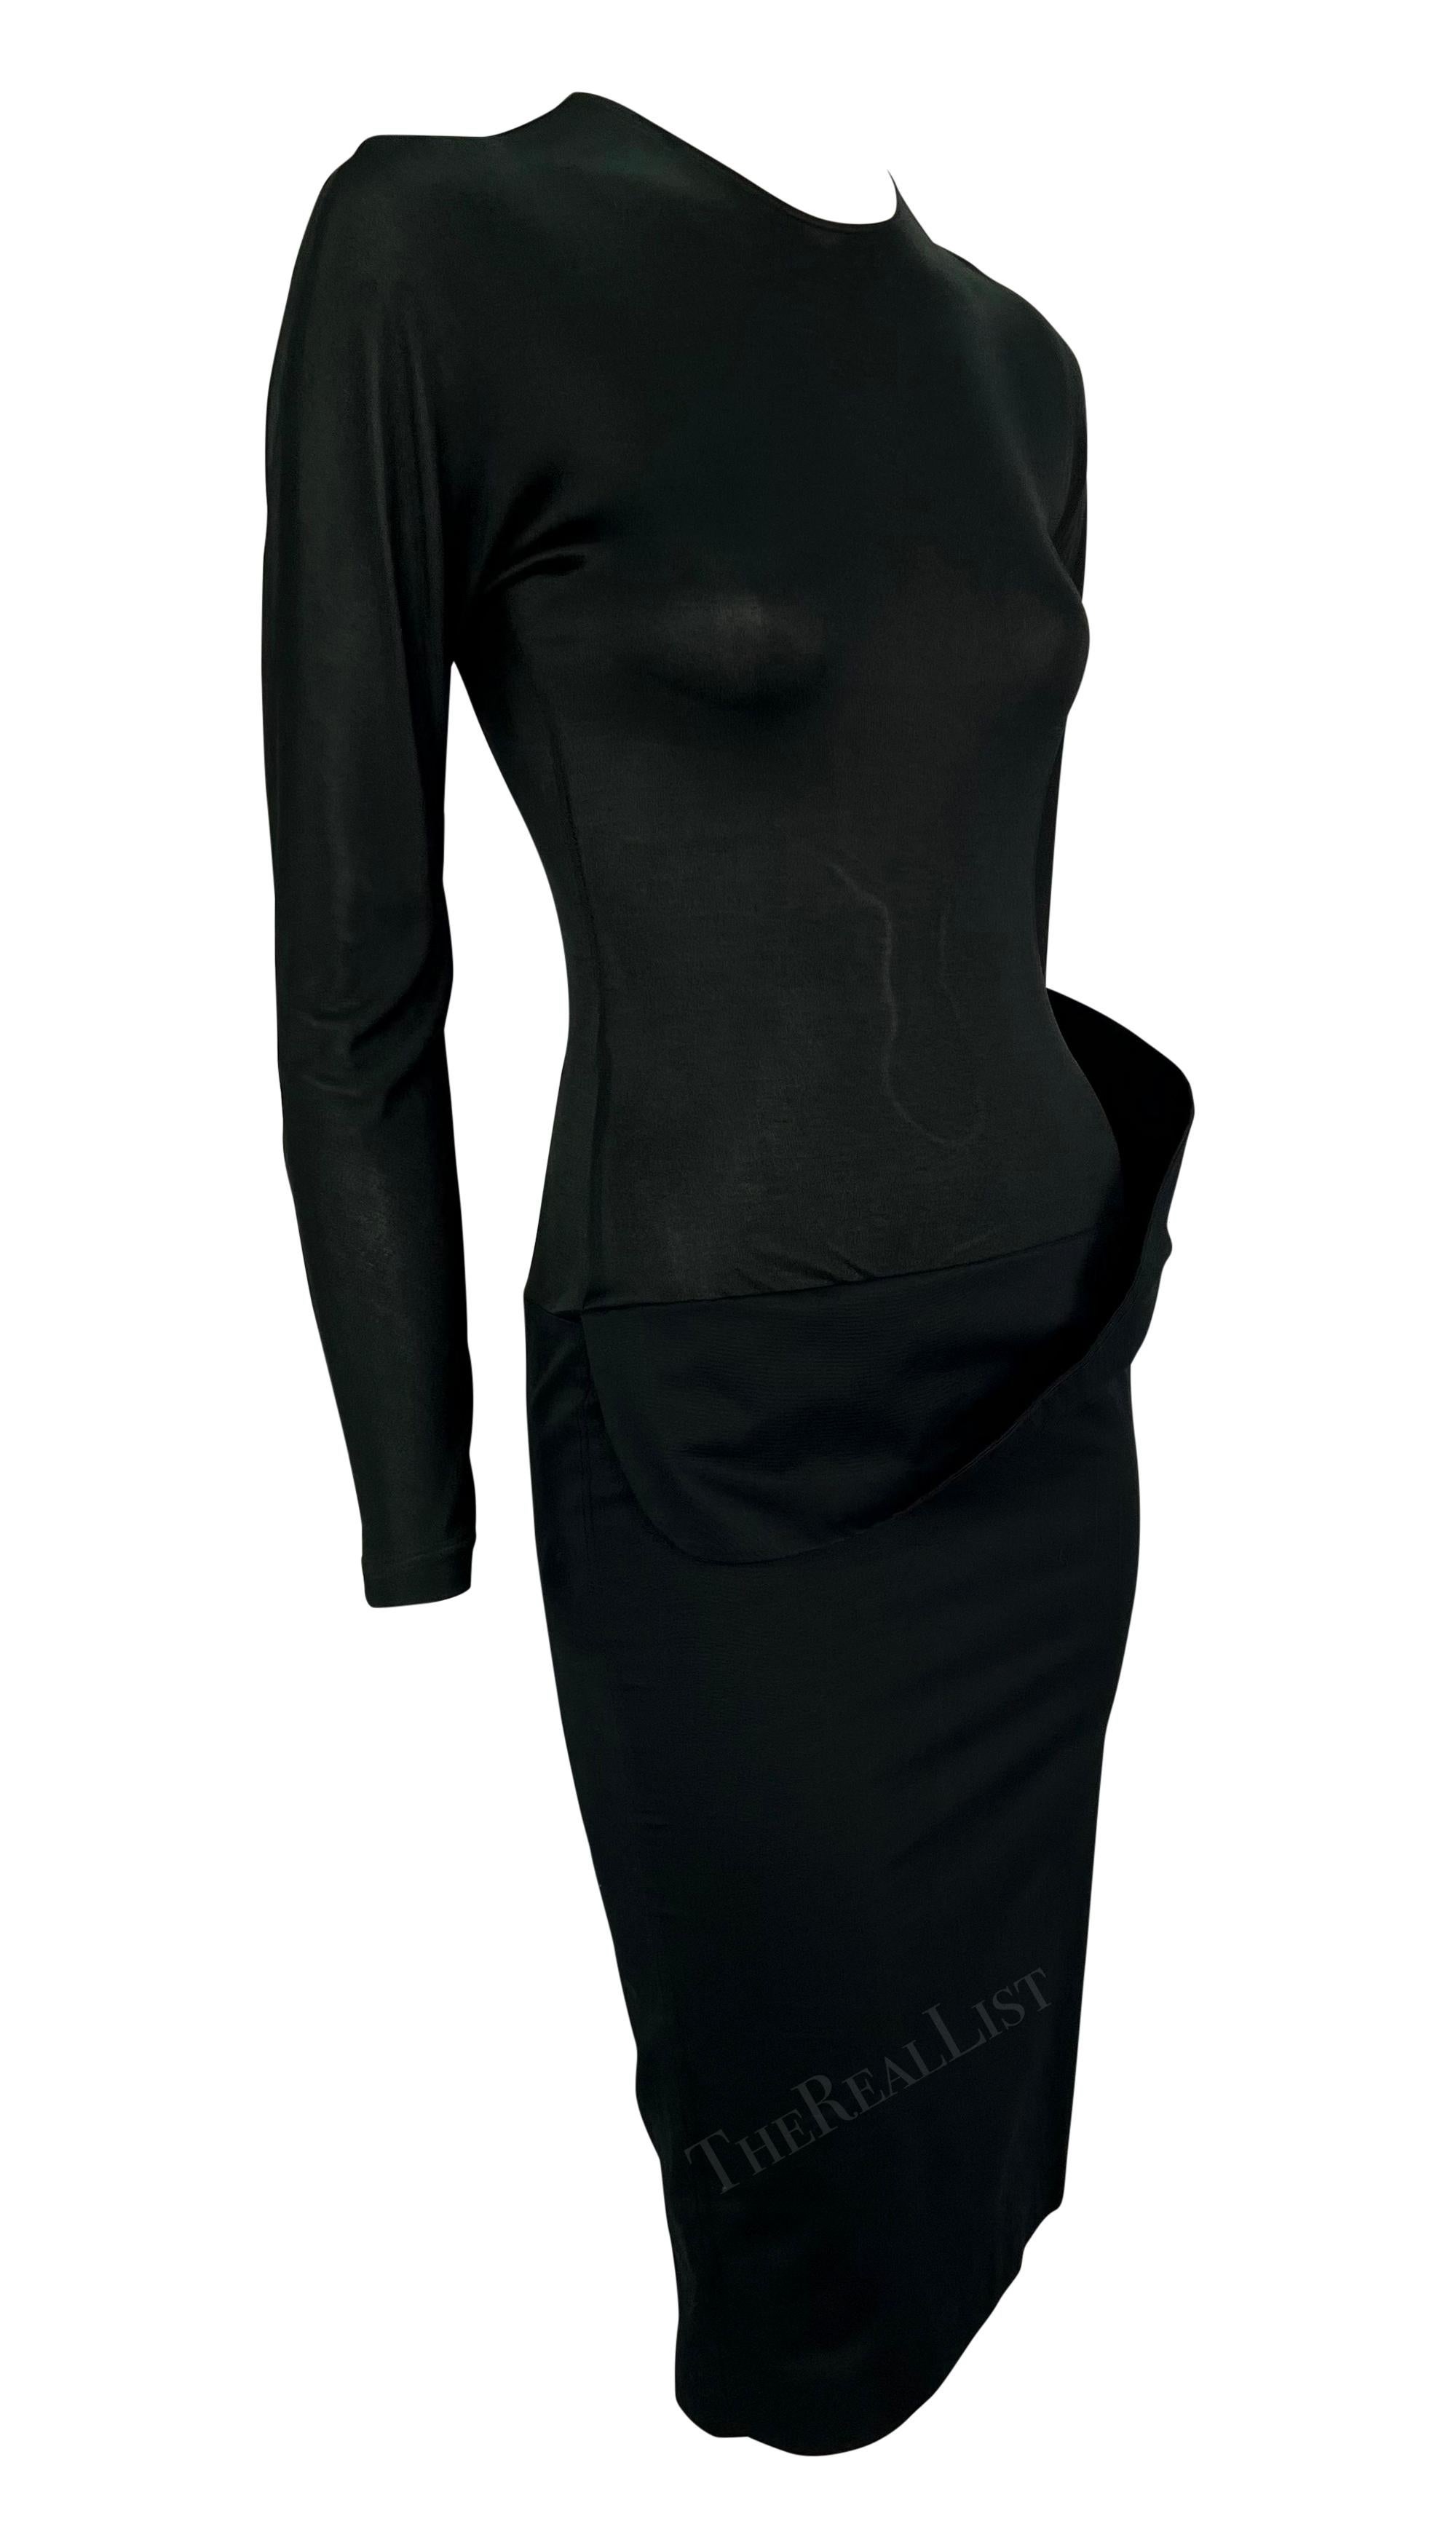 S/S 1998 Alexander McQueen 'Golden Shower' Black Long Sleeve Cowl Dress For Sale 3